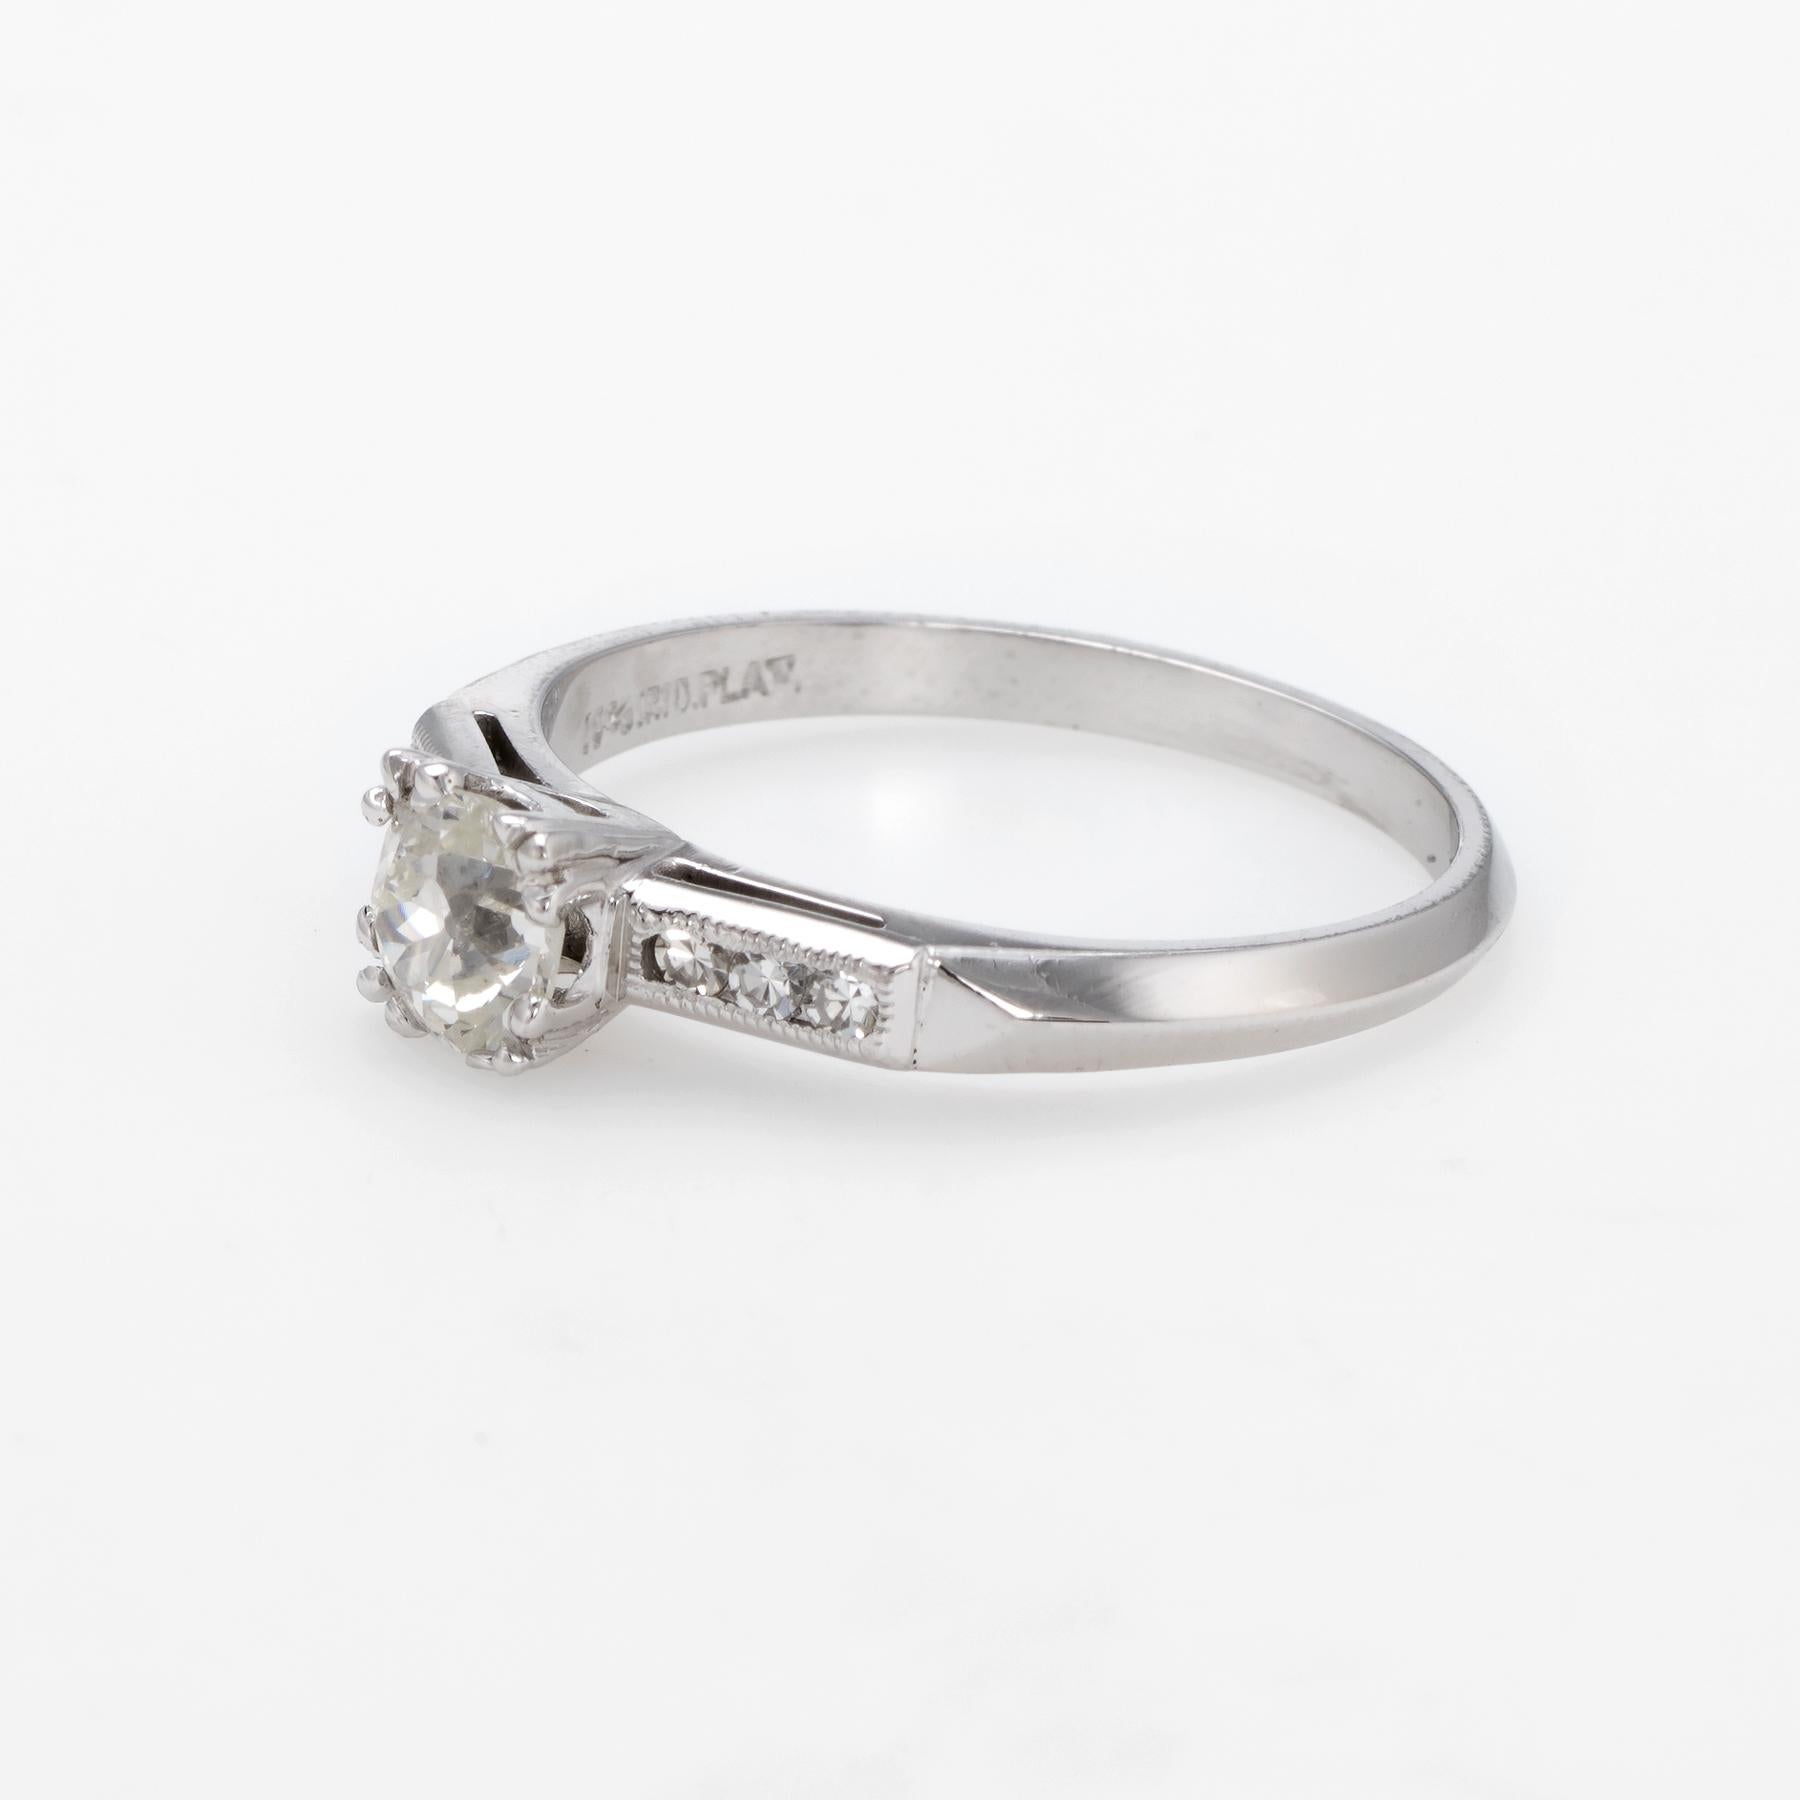 Old Mine Cut Antique Deco Diamond Ring Platinum Engagement Vintage Fine Jewelry